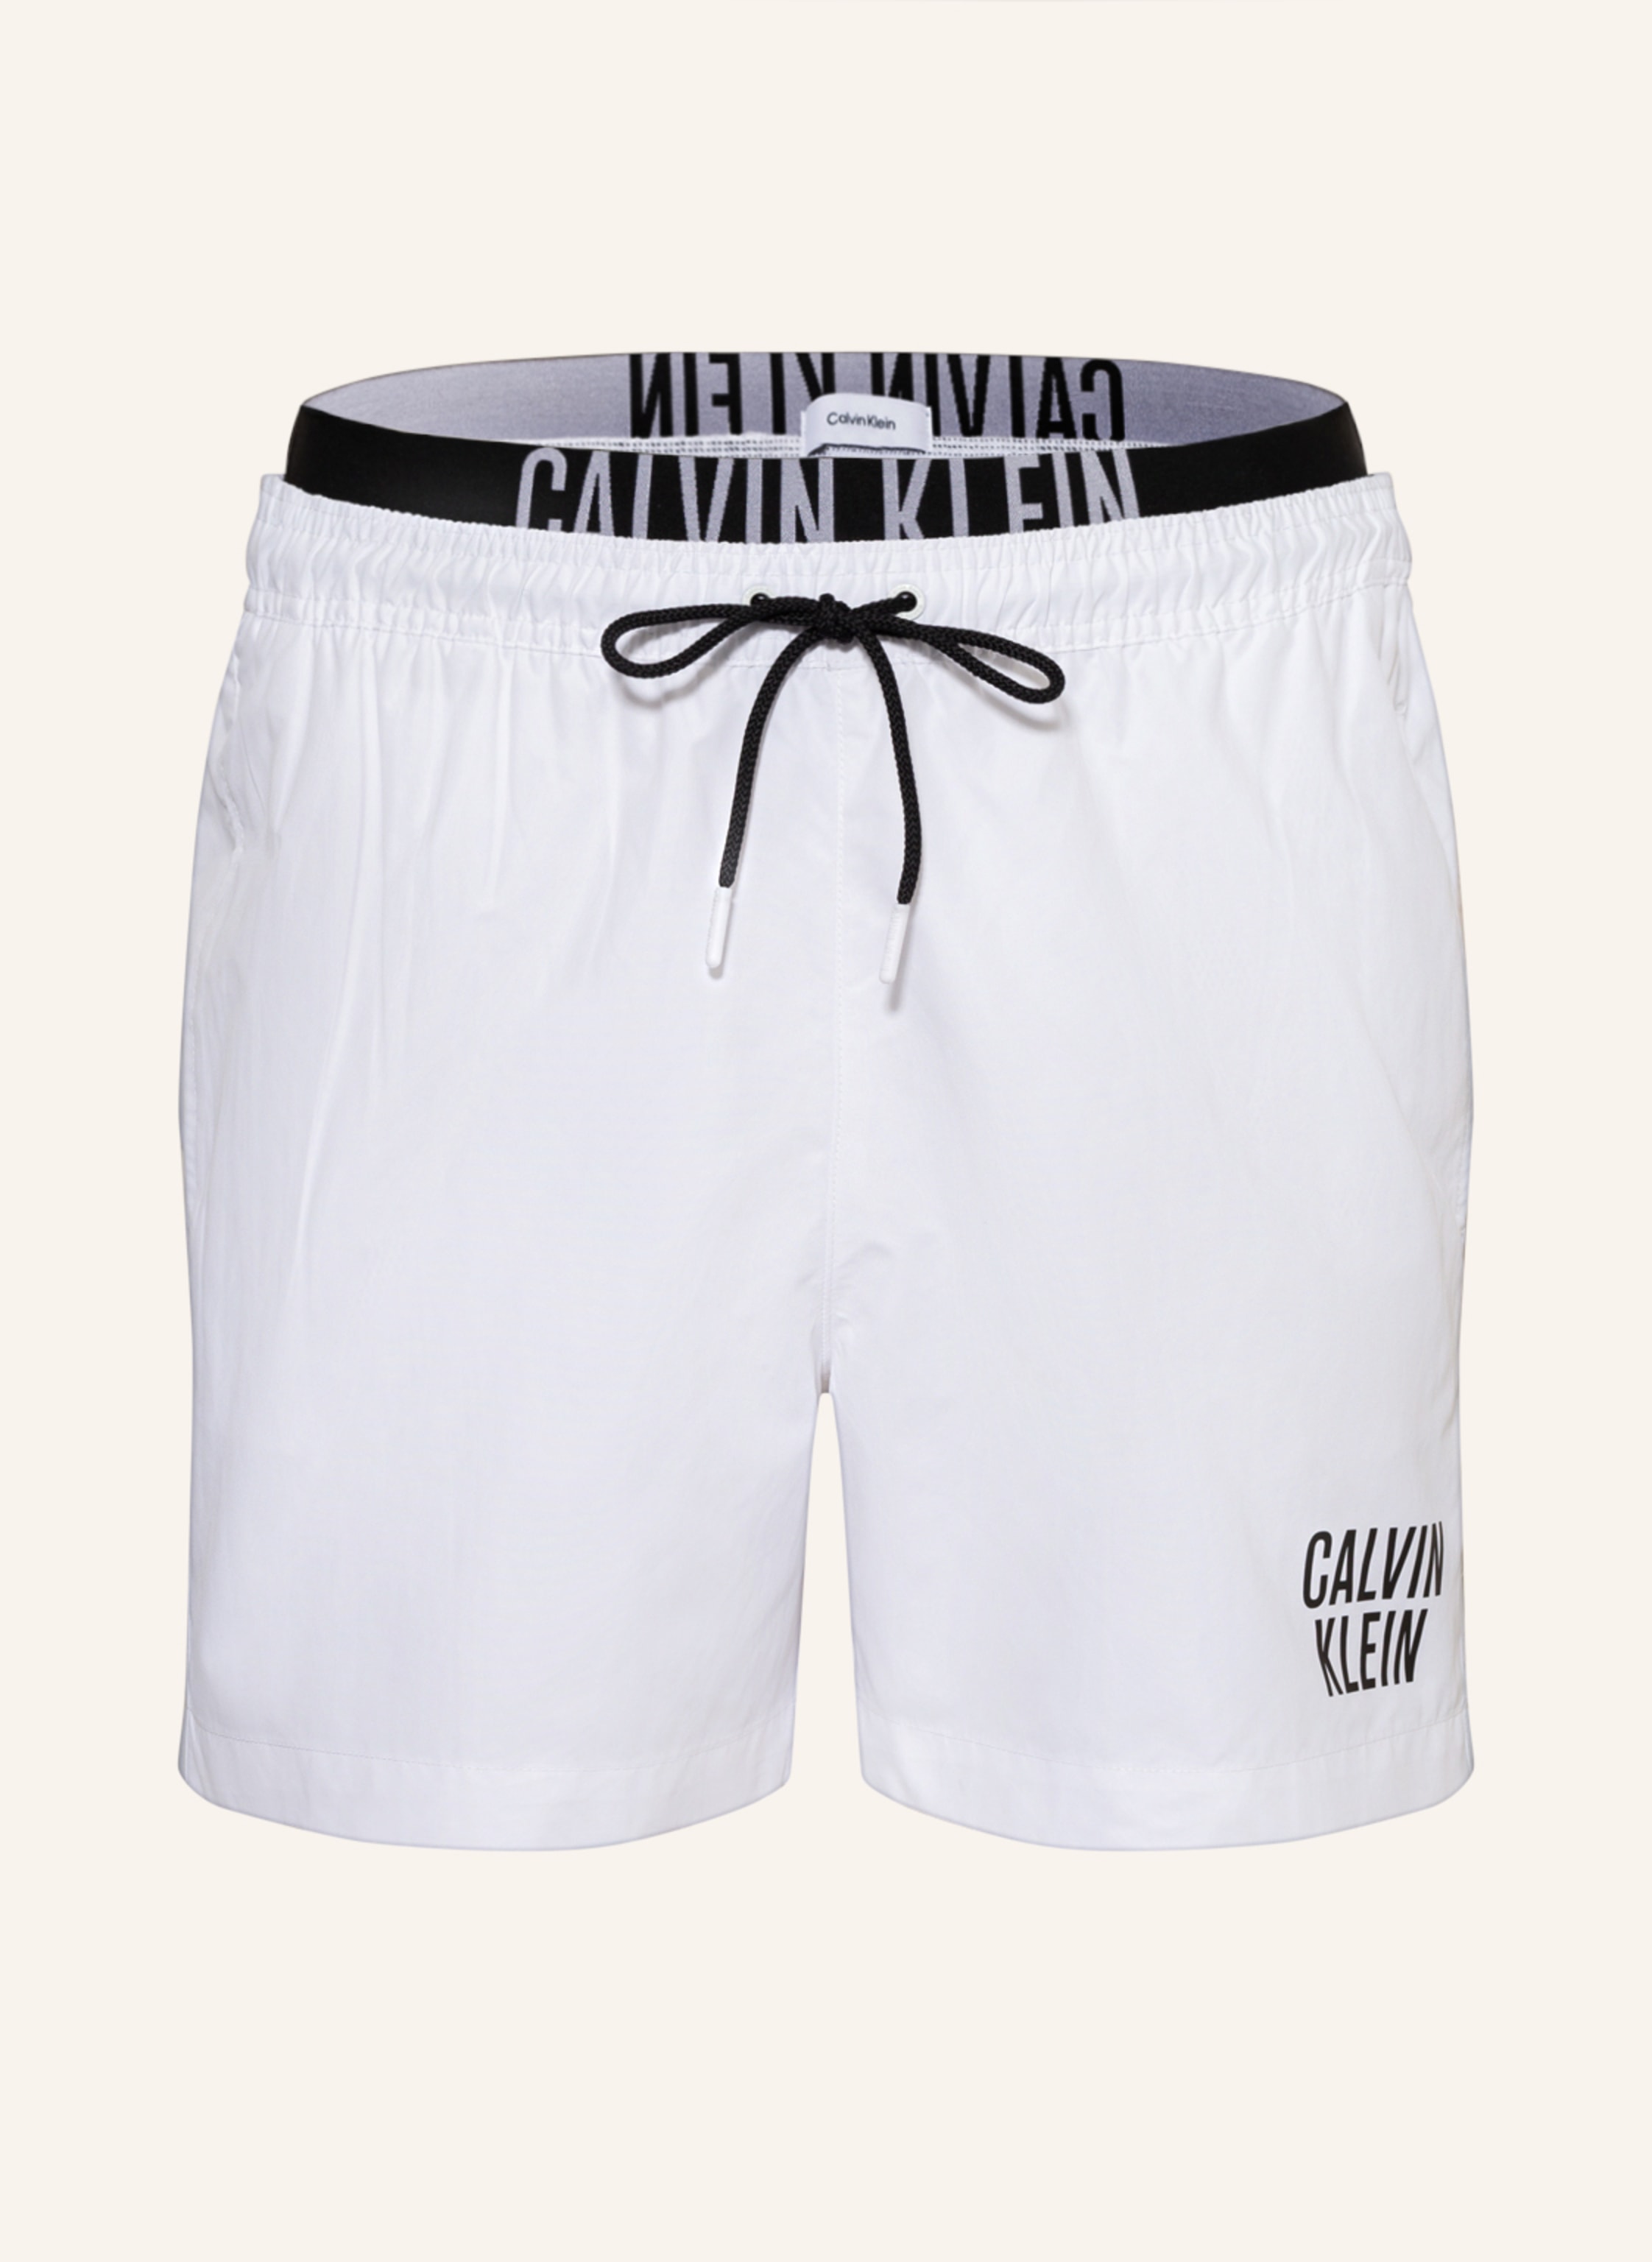 Calvin Klein Swim shorts INTENSE POWER in white | Breuninger